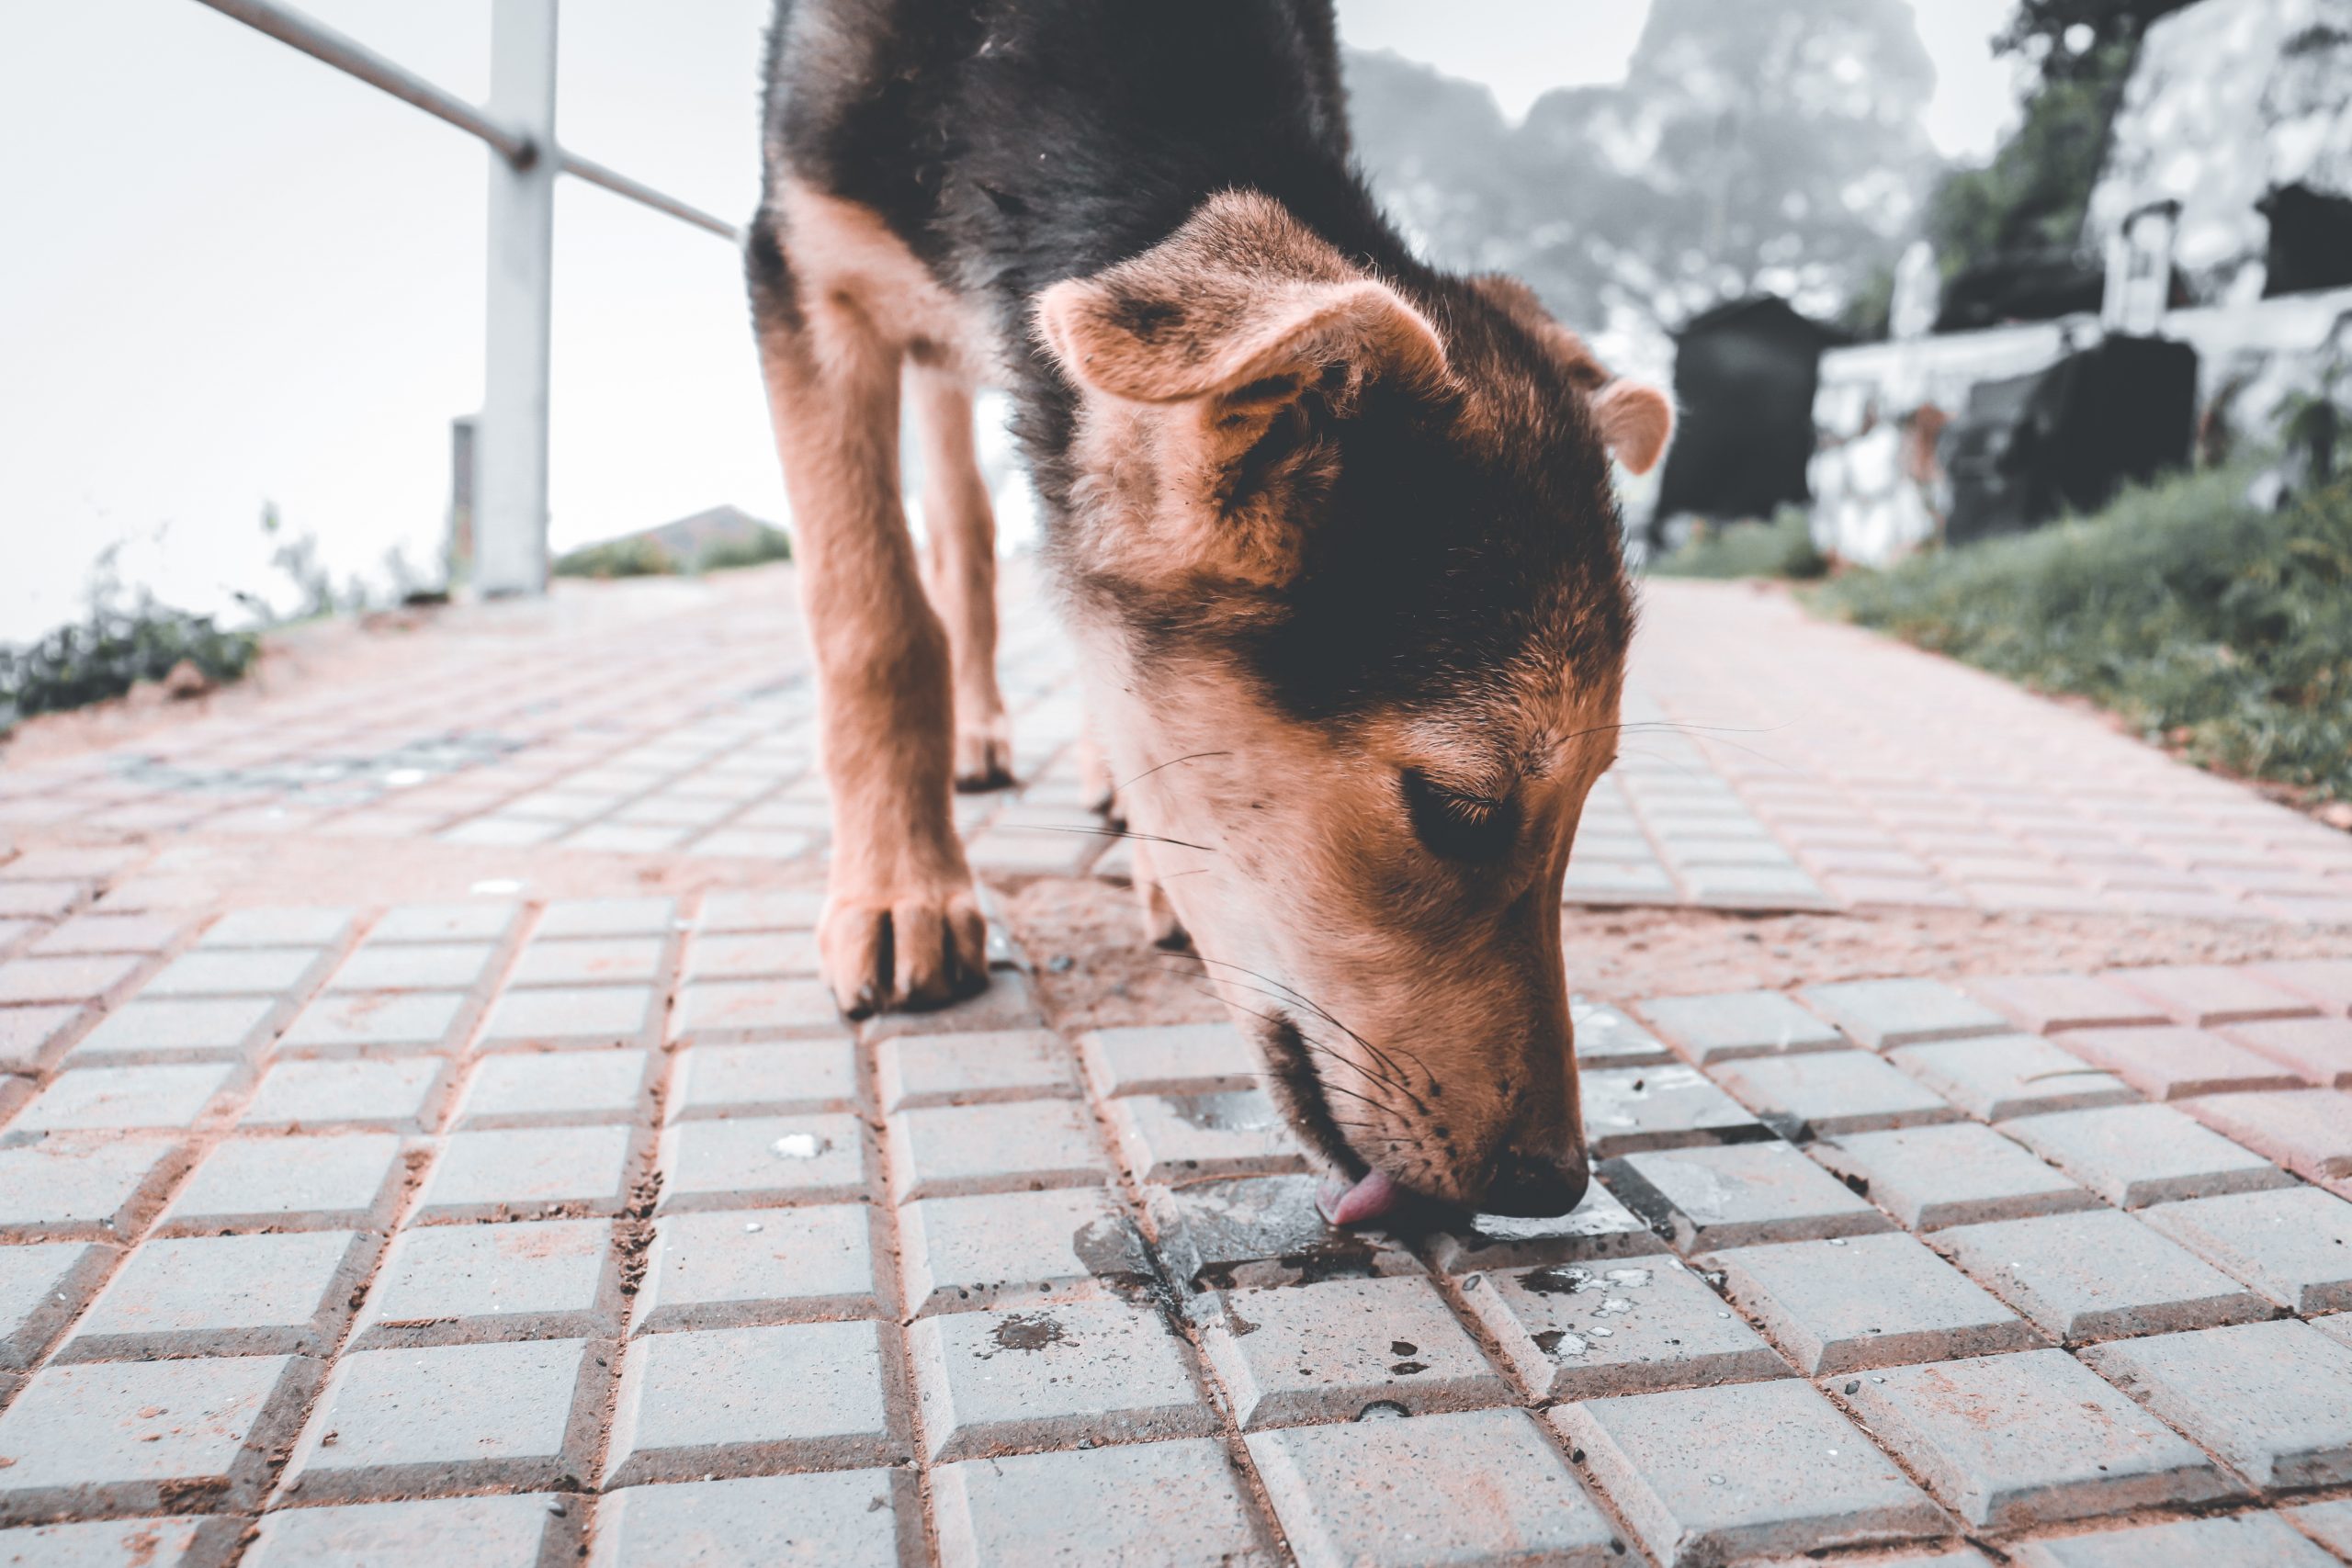 A street dog licking food waste